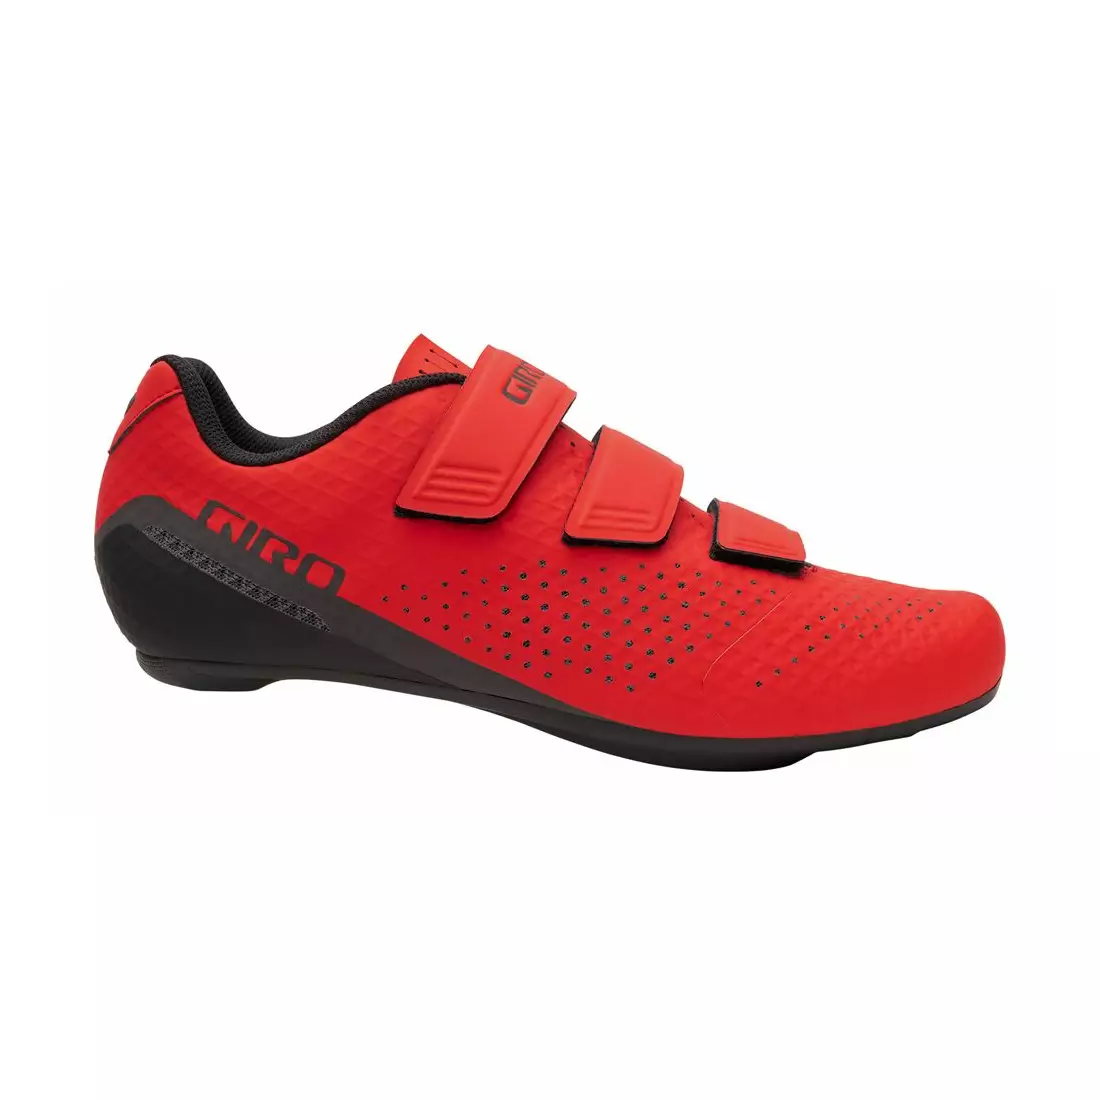 GIRO pantofi de ciclism pentru bărbați STYLUS bright red GR-7126156